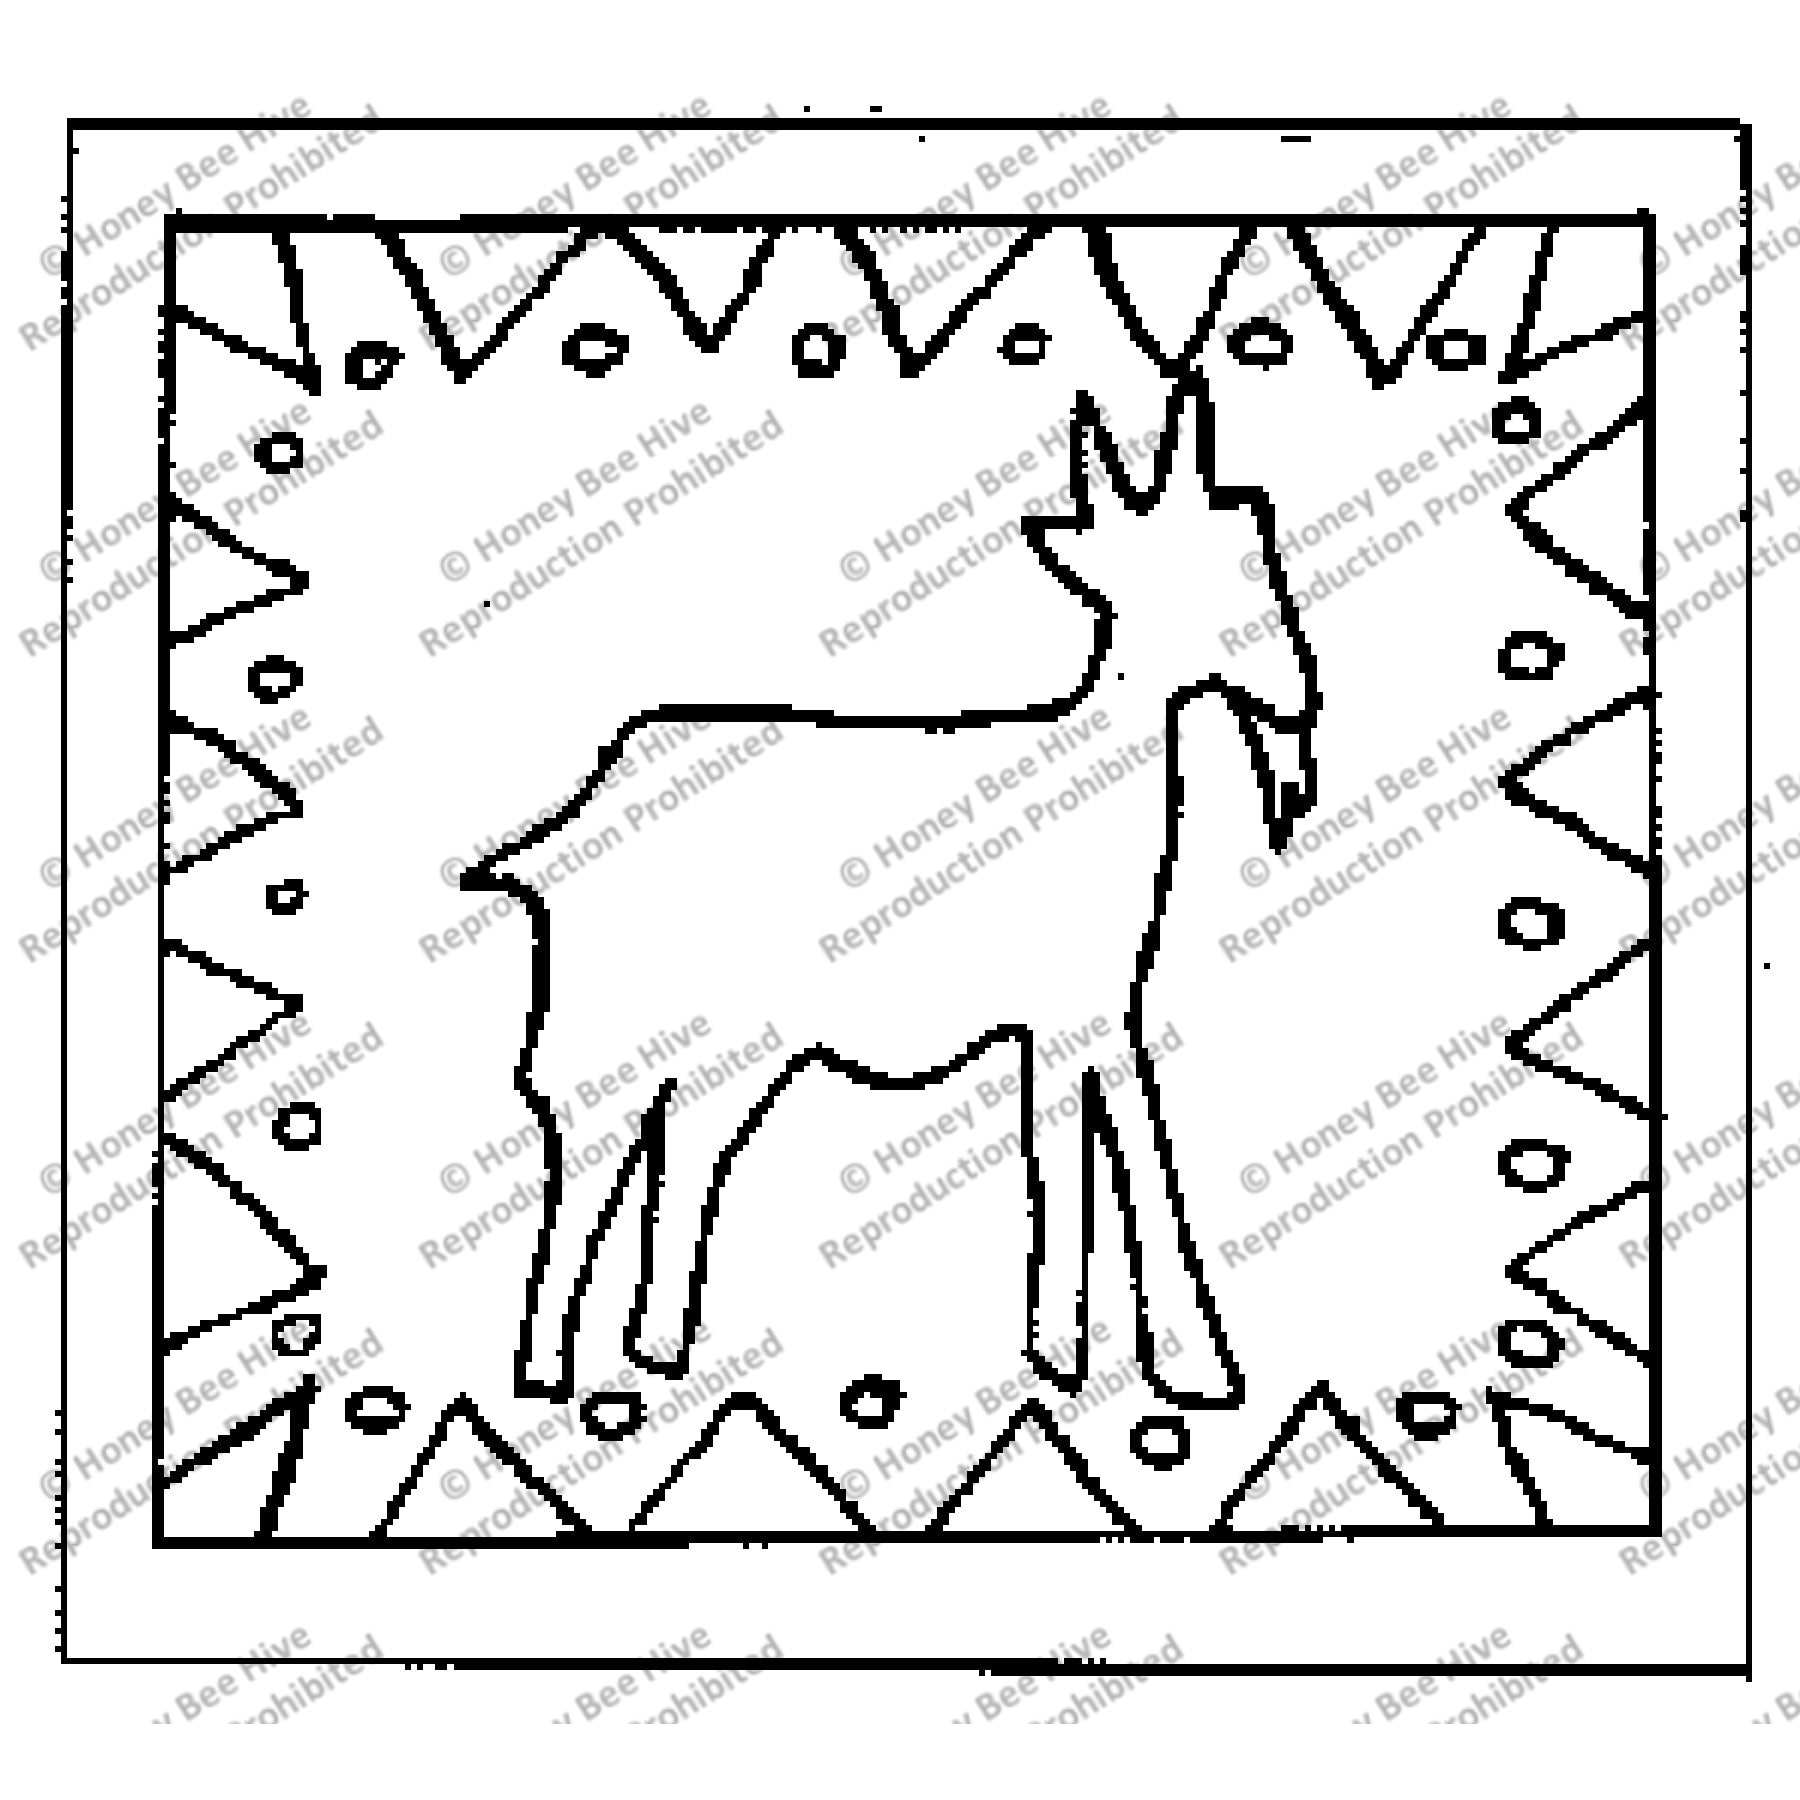 Goat Gruff, rug hooking pattern